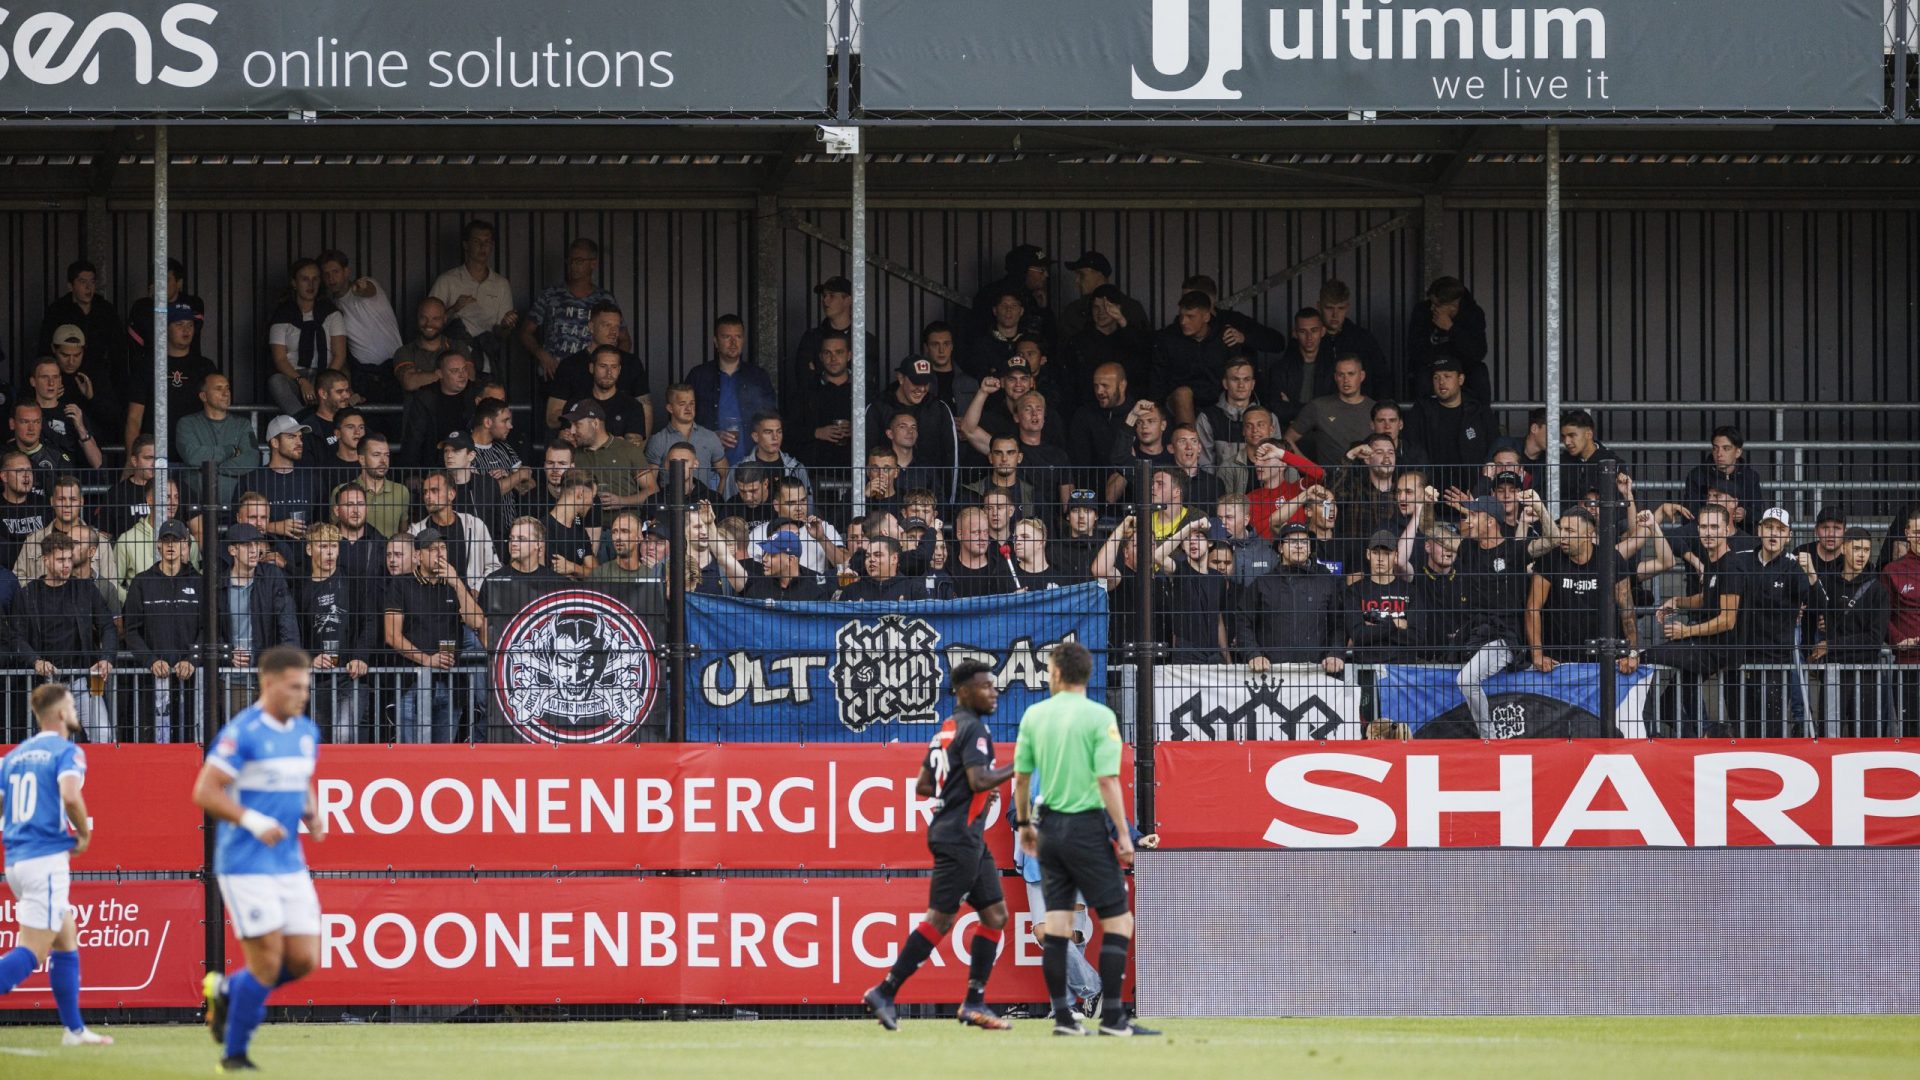 ALMERE, 26-08-2022, Yanmar stadium, season 2022 / 2023, Dutch Football Keuken Kampioen Divisie. FC Den Bosch supporters during the match Almere City FC - FC Den Bosch